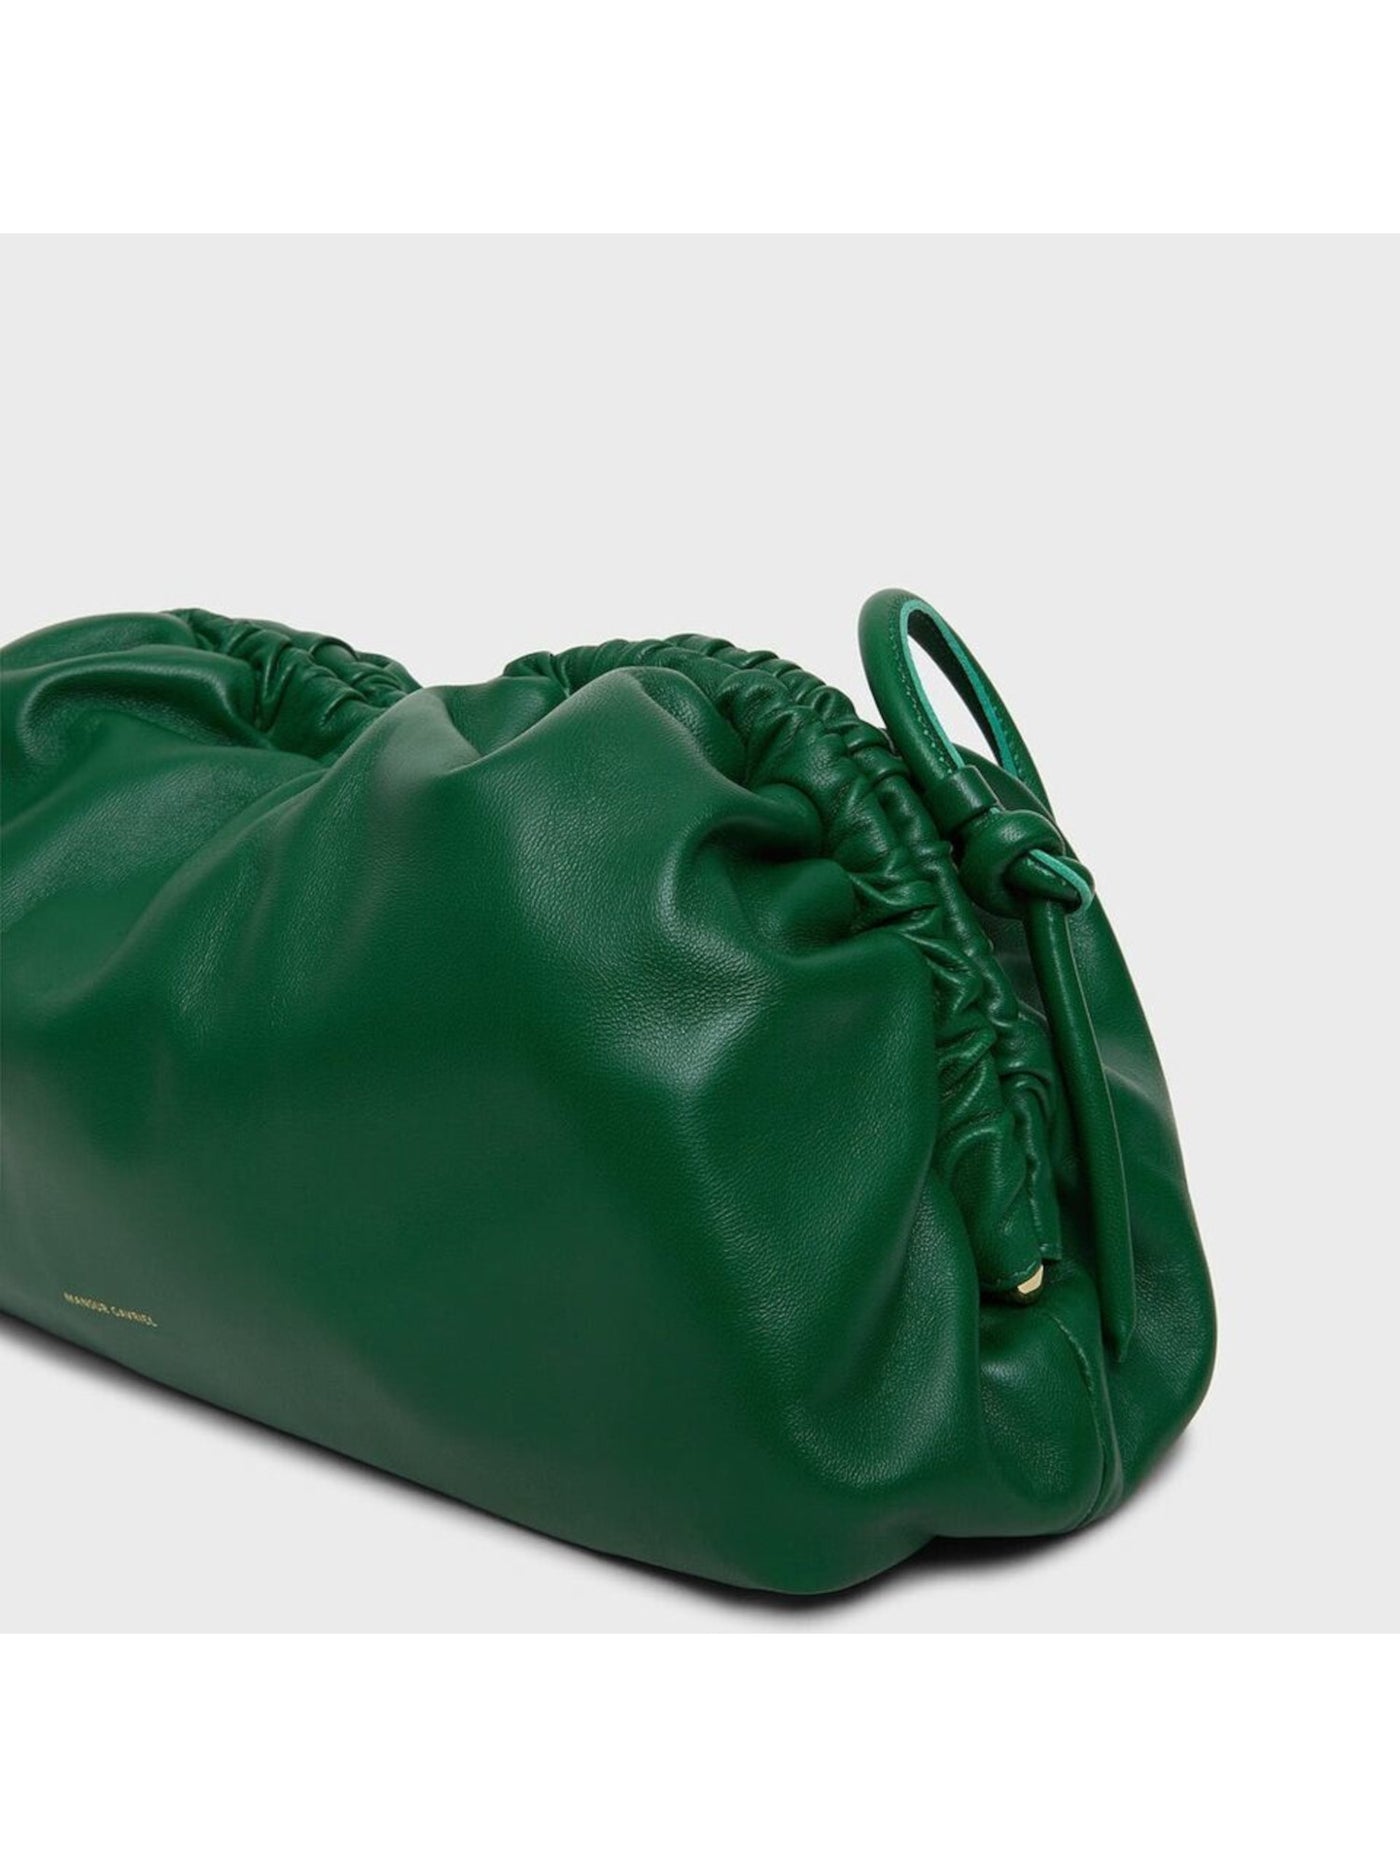 MANSUR GAVRIEL Women's Green Solid Leather Single Strap Clutch Handbag Purse